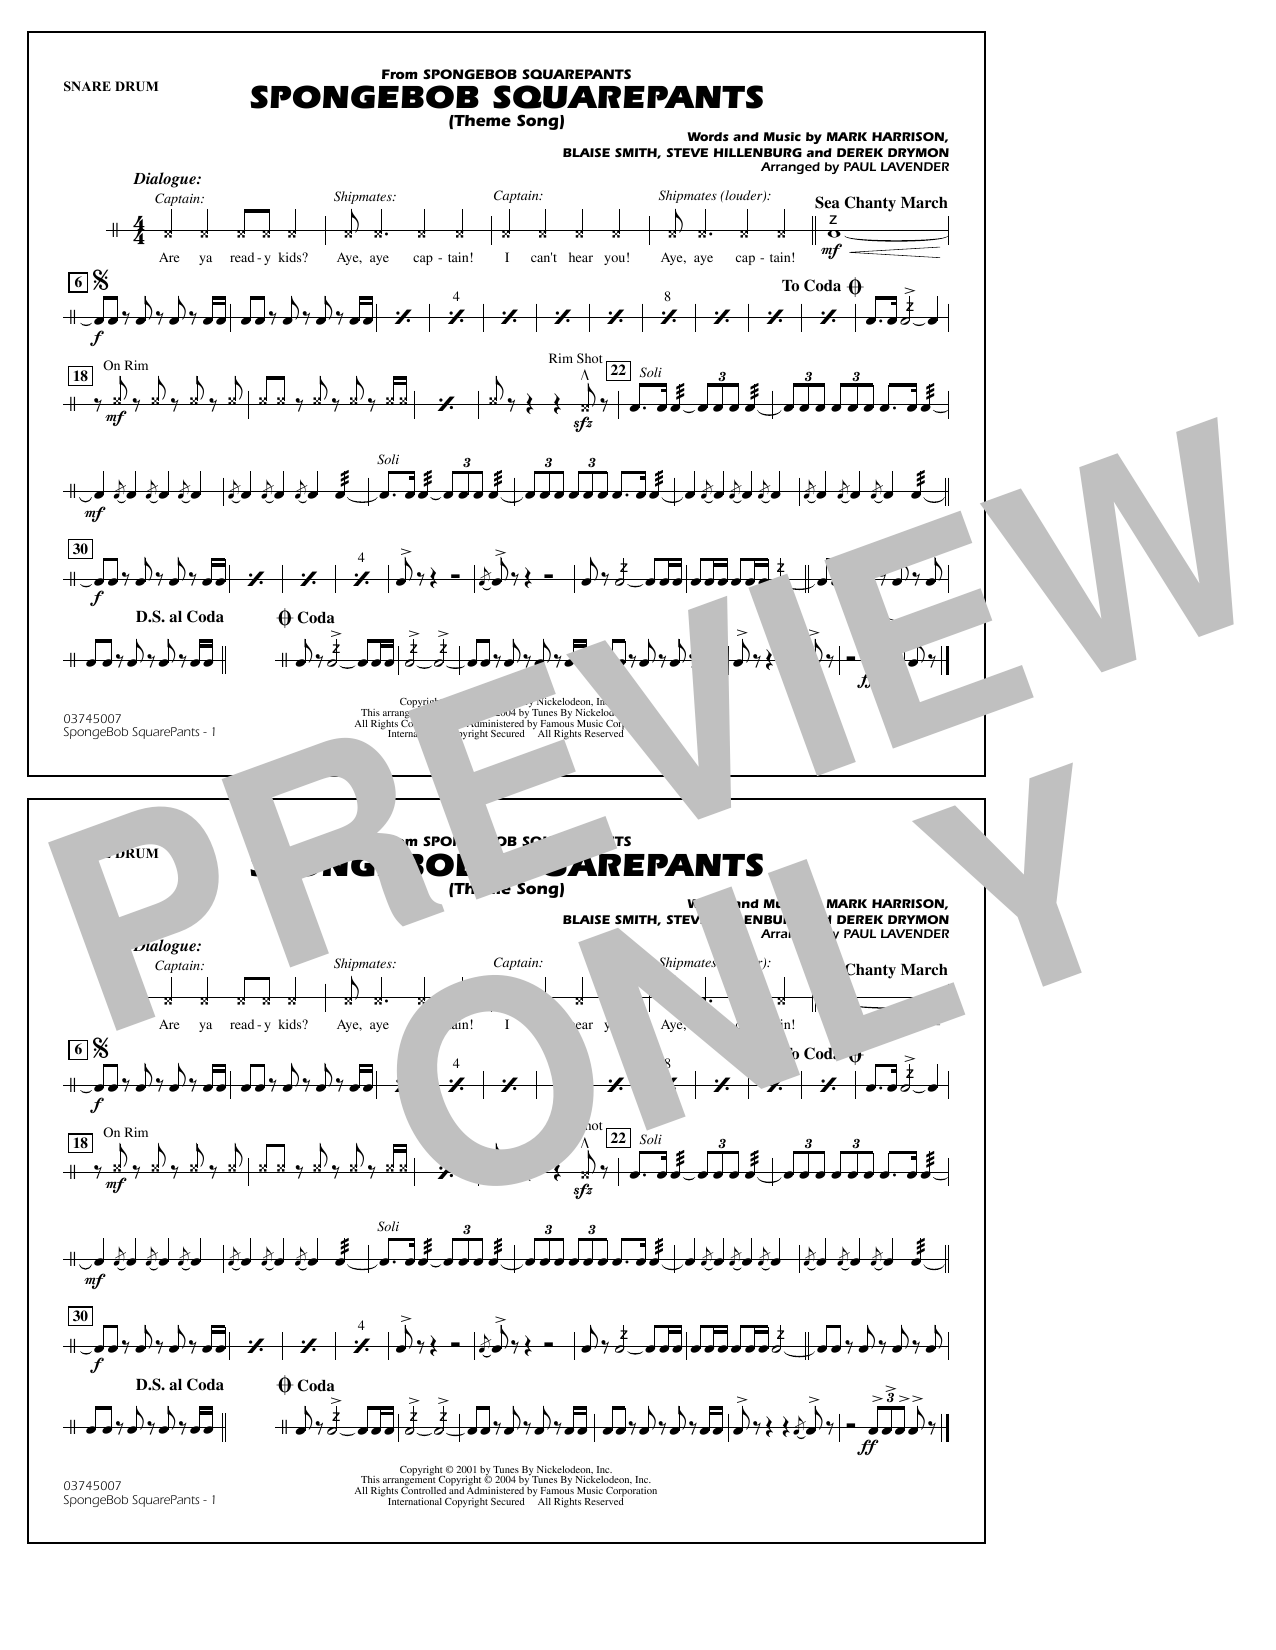 Steve Hillenburg Spongebob Squarepants (Theme Song) (arr. Paul Lavender) - Snare Drum Sheet Music Notes & Chords for Marching Band - Download or Print PDF